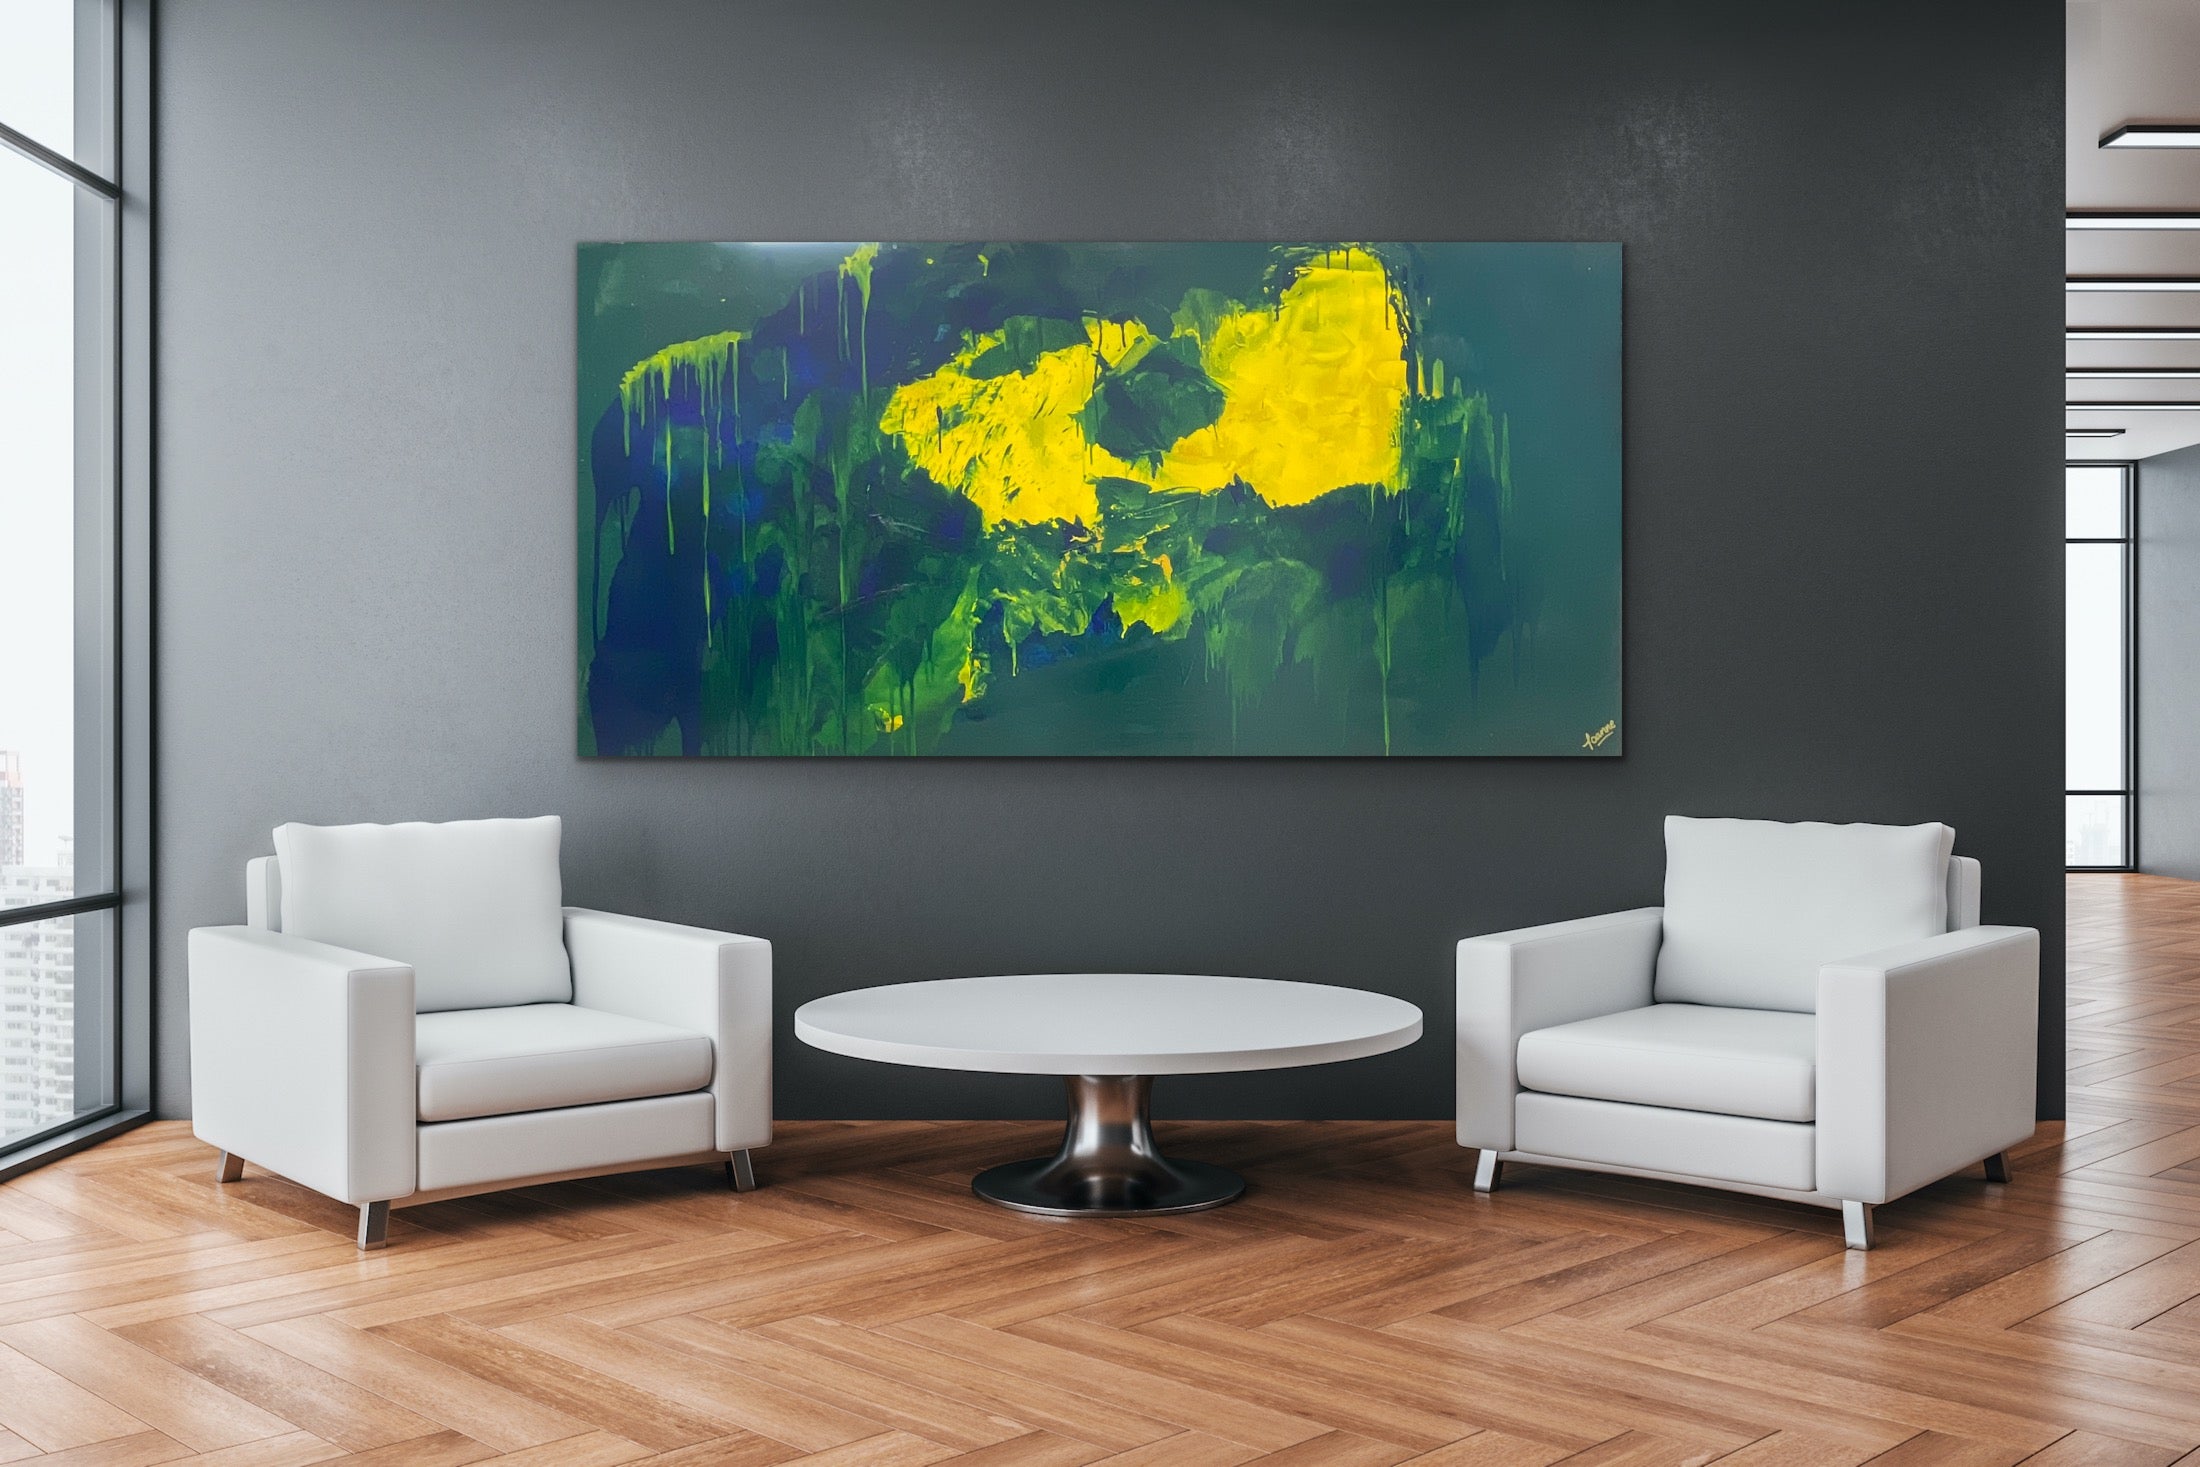 Lemon splash (91 cm x 182 cm)Textured Abstract Painting by Joanne Daniel